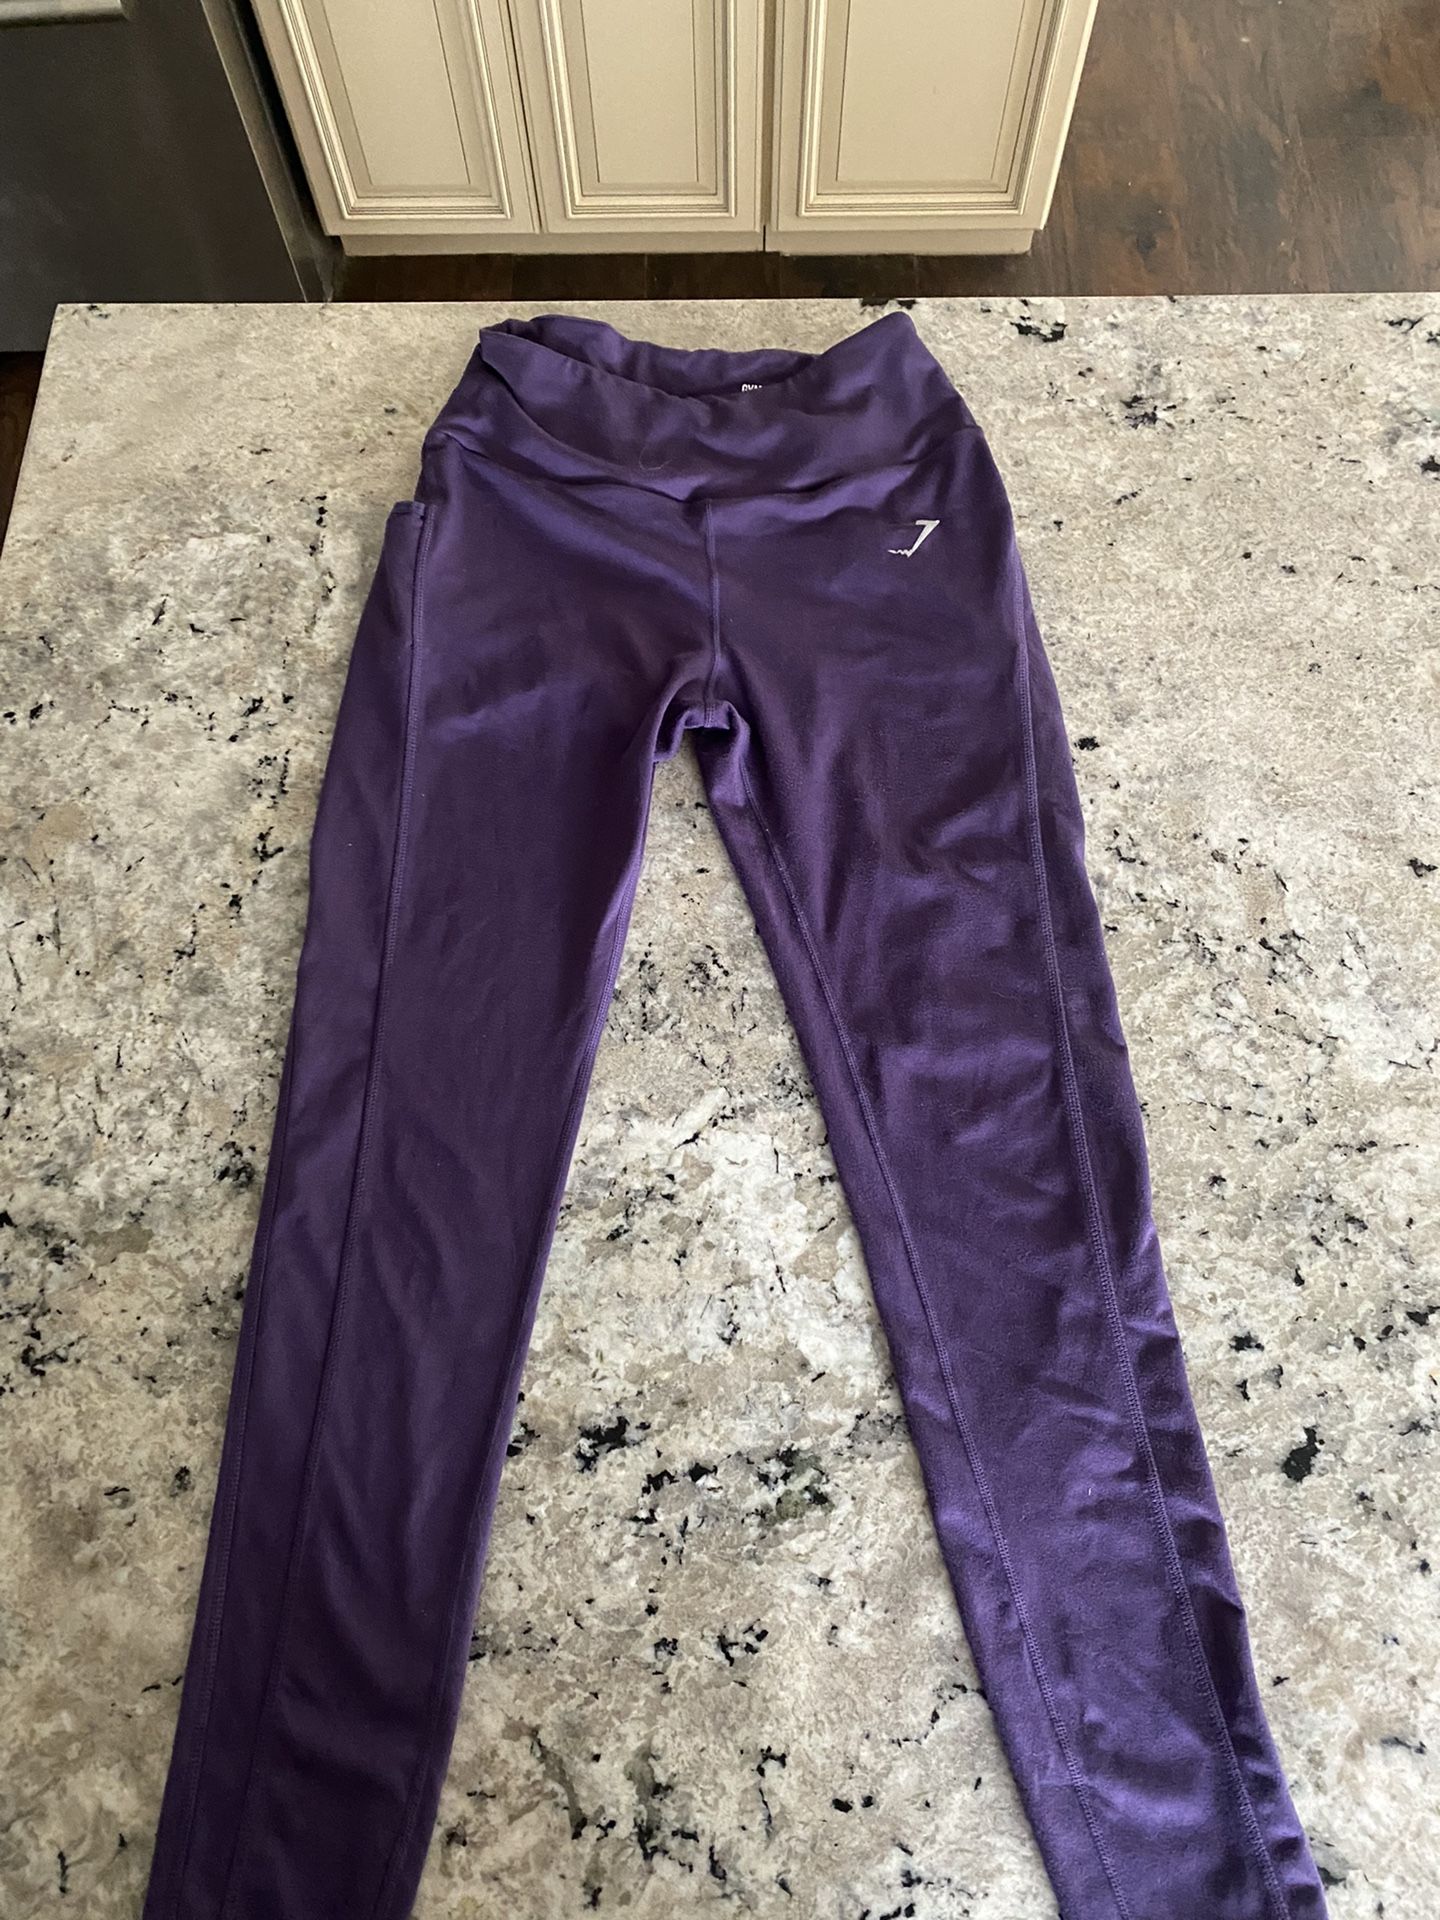 Used Size Small Purple Gymshark Leggings